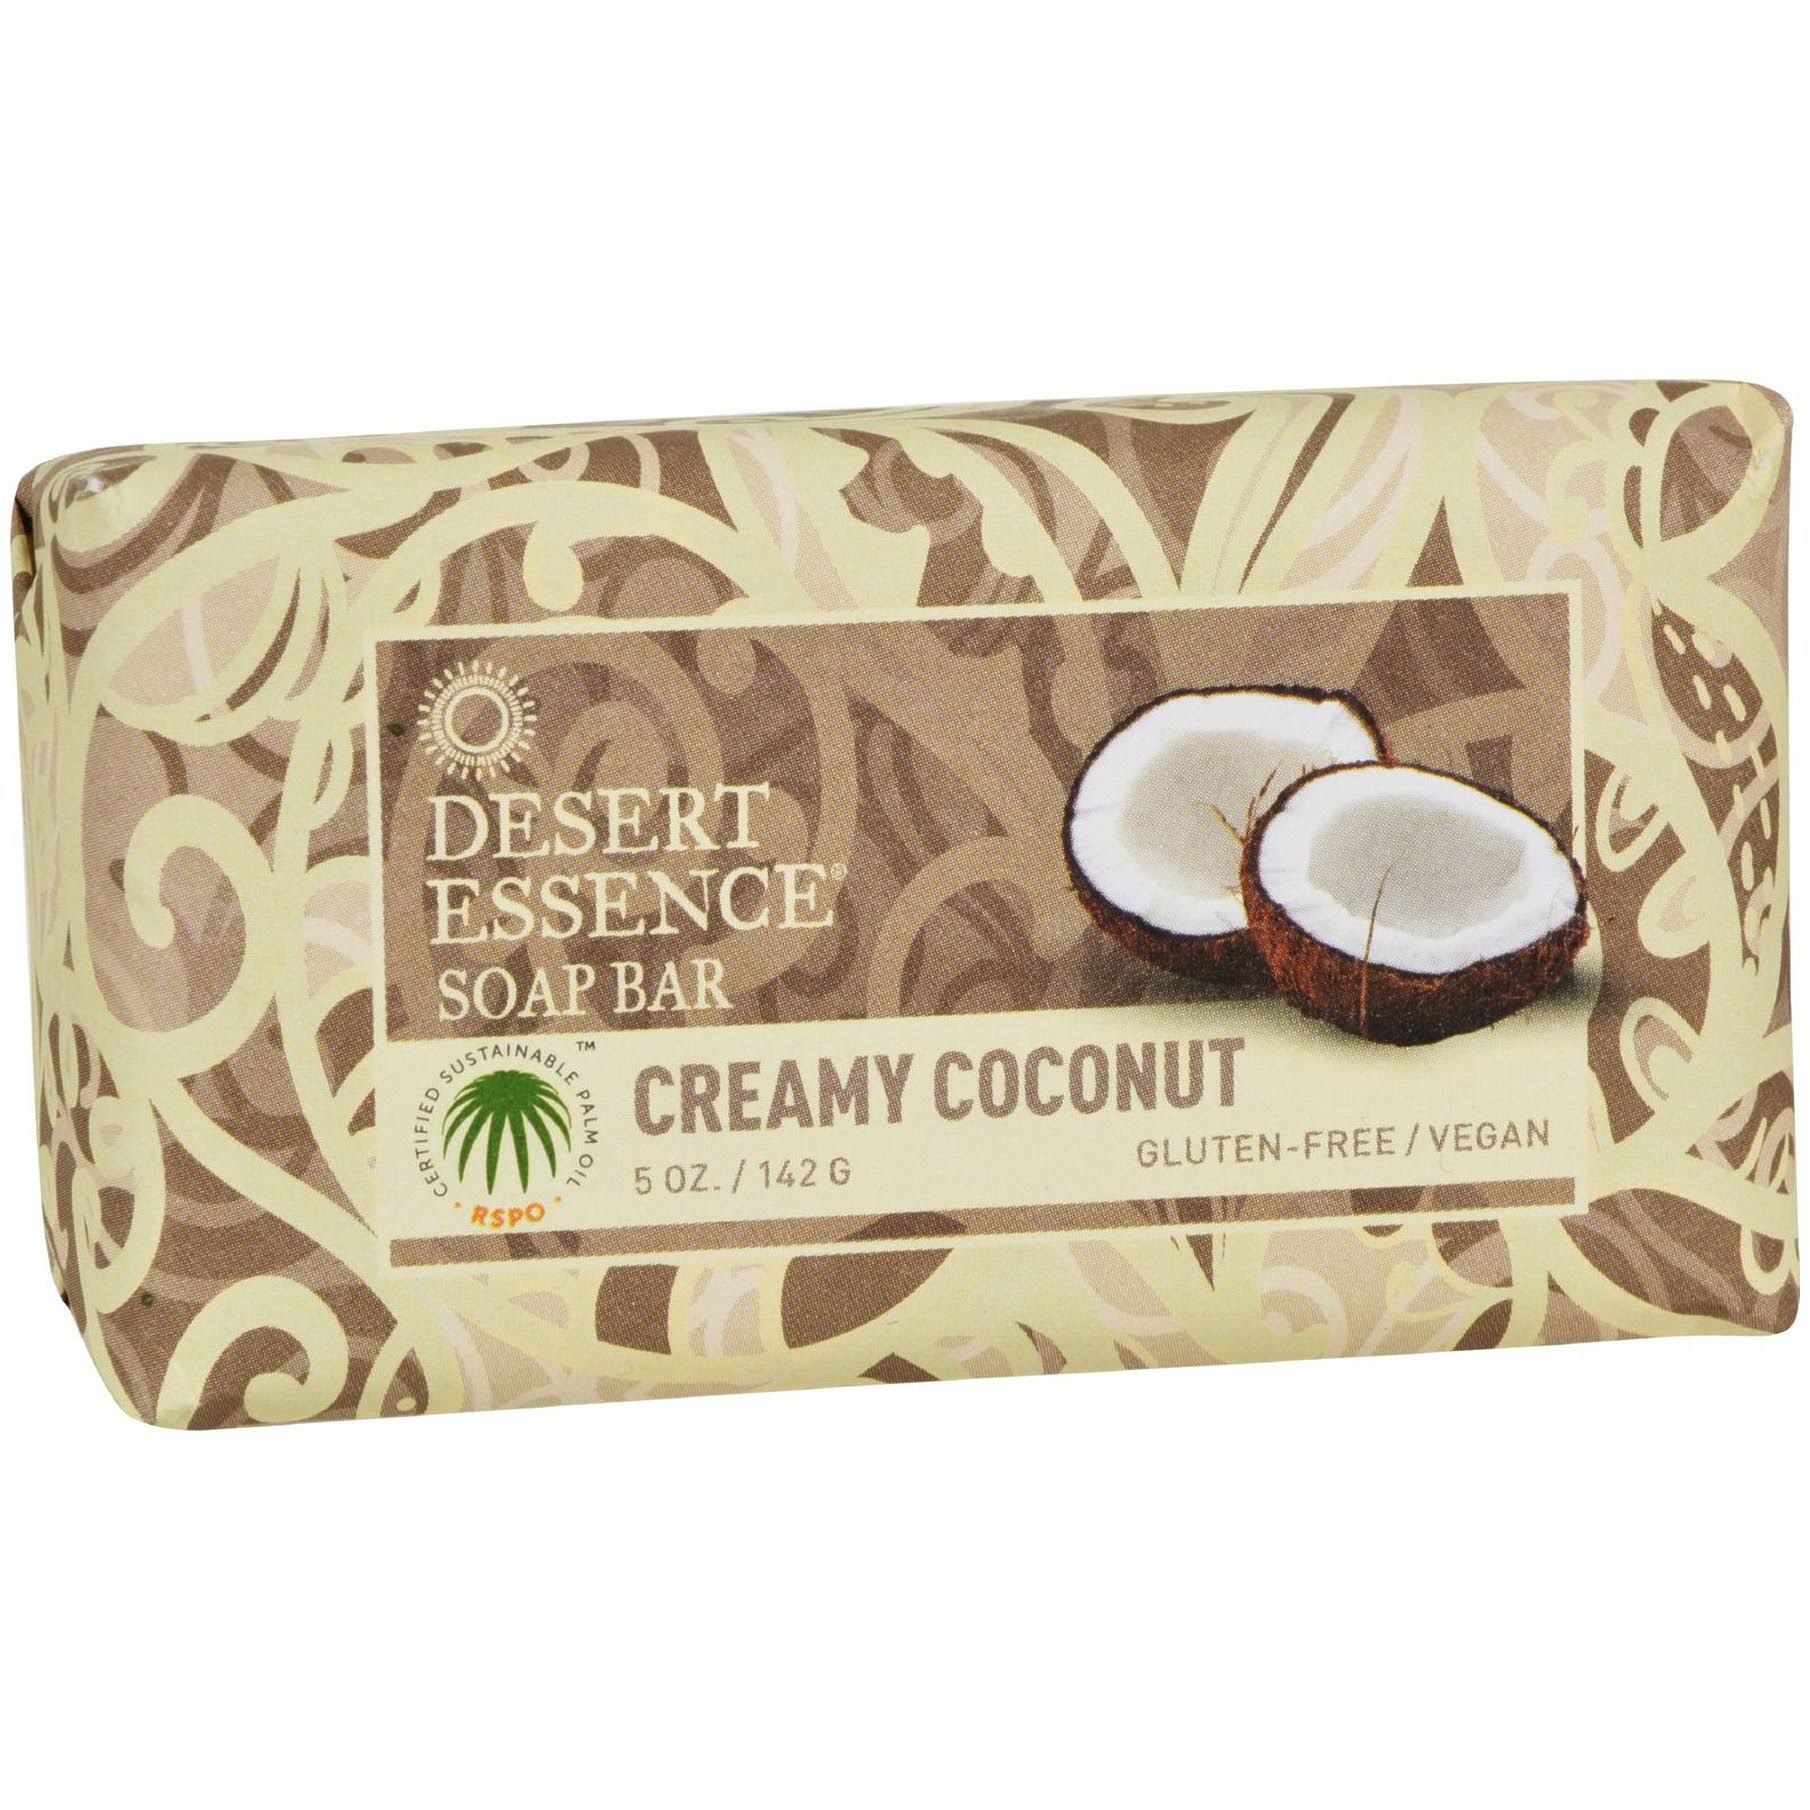 Desert Essence Bar Soap - Creamy Coconut, 5oz